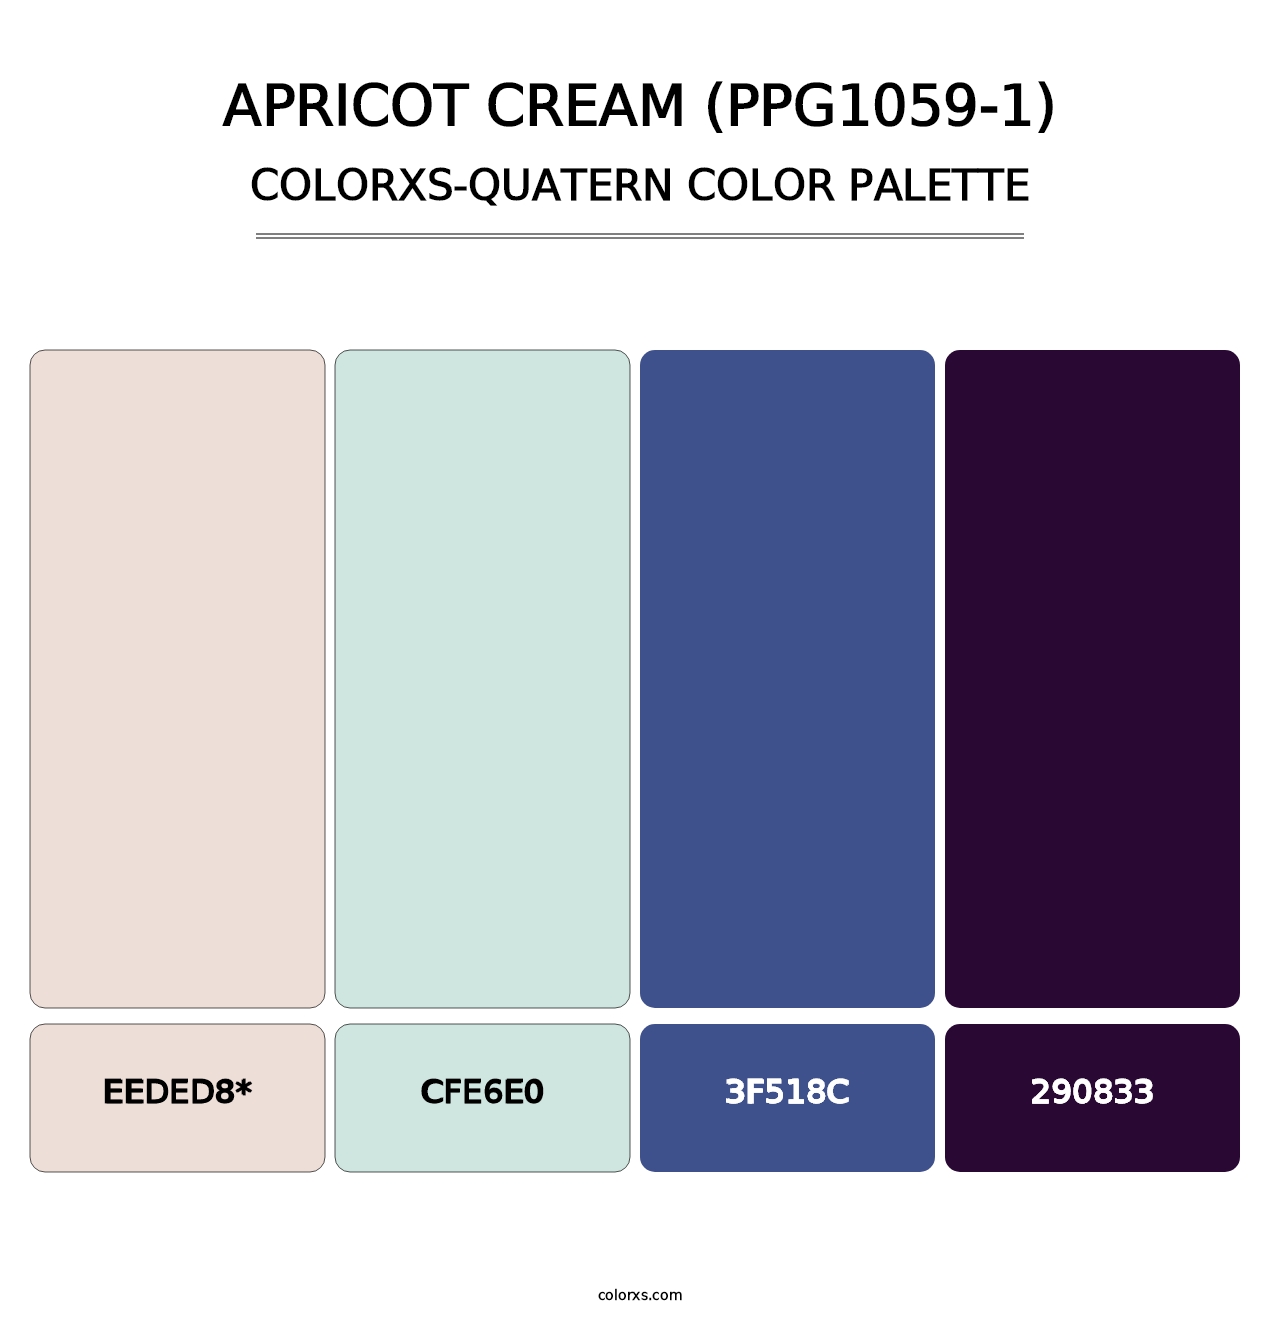 Apricot Cream (PPG1059-1) - Colorxs Quatern Palette